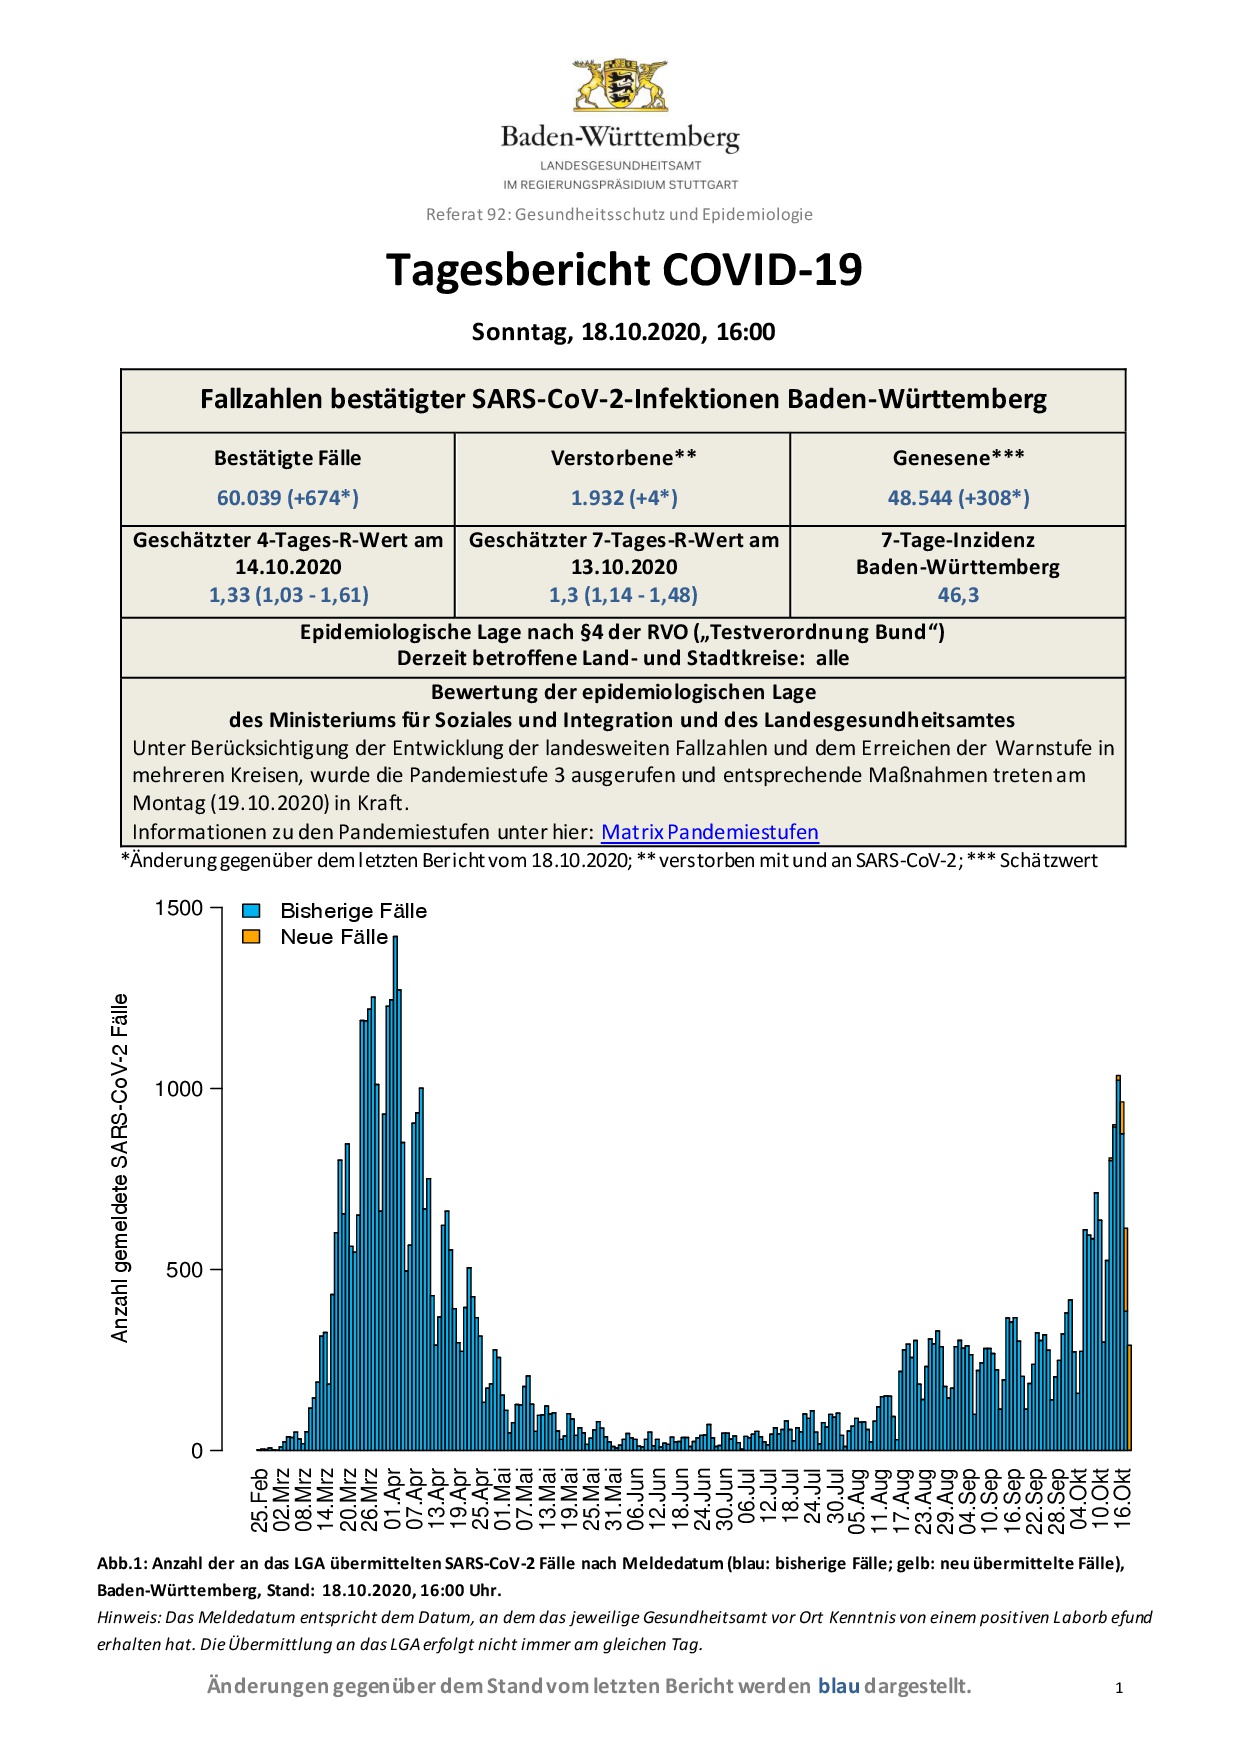 COVID-19 Tagesbericht (18.10.2020) des Landesgesundheitsamts Baden-Württemberg